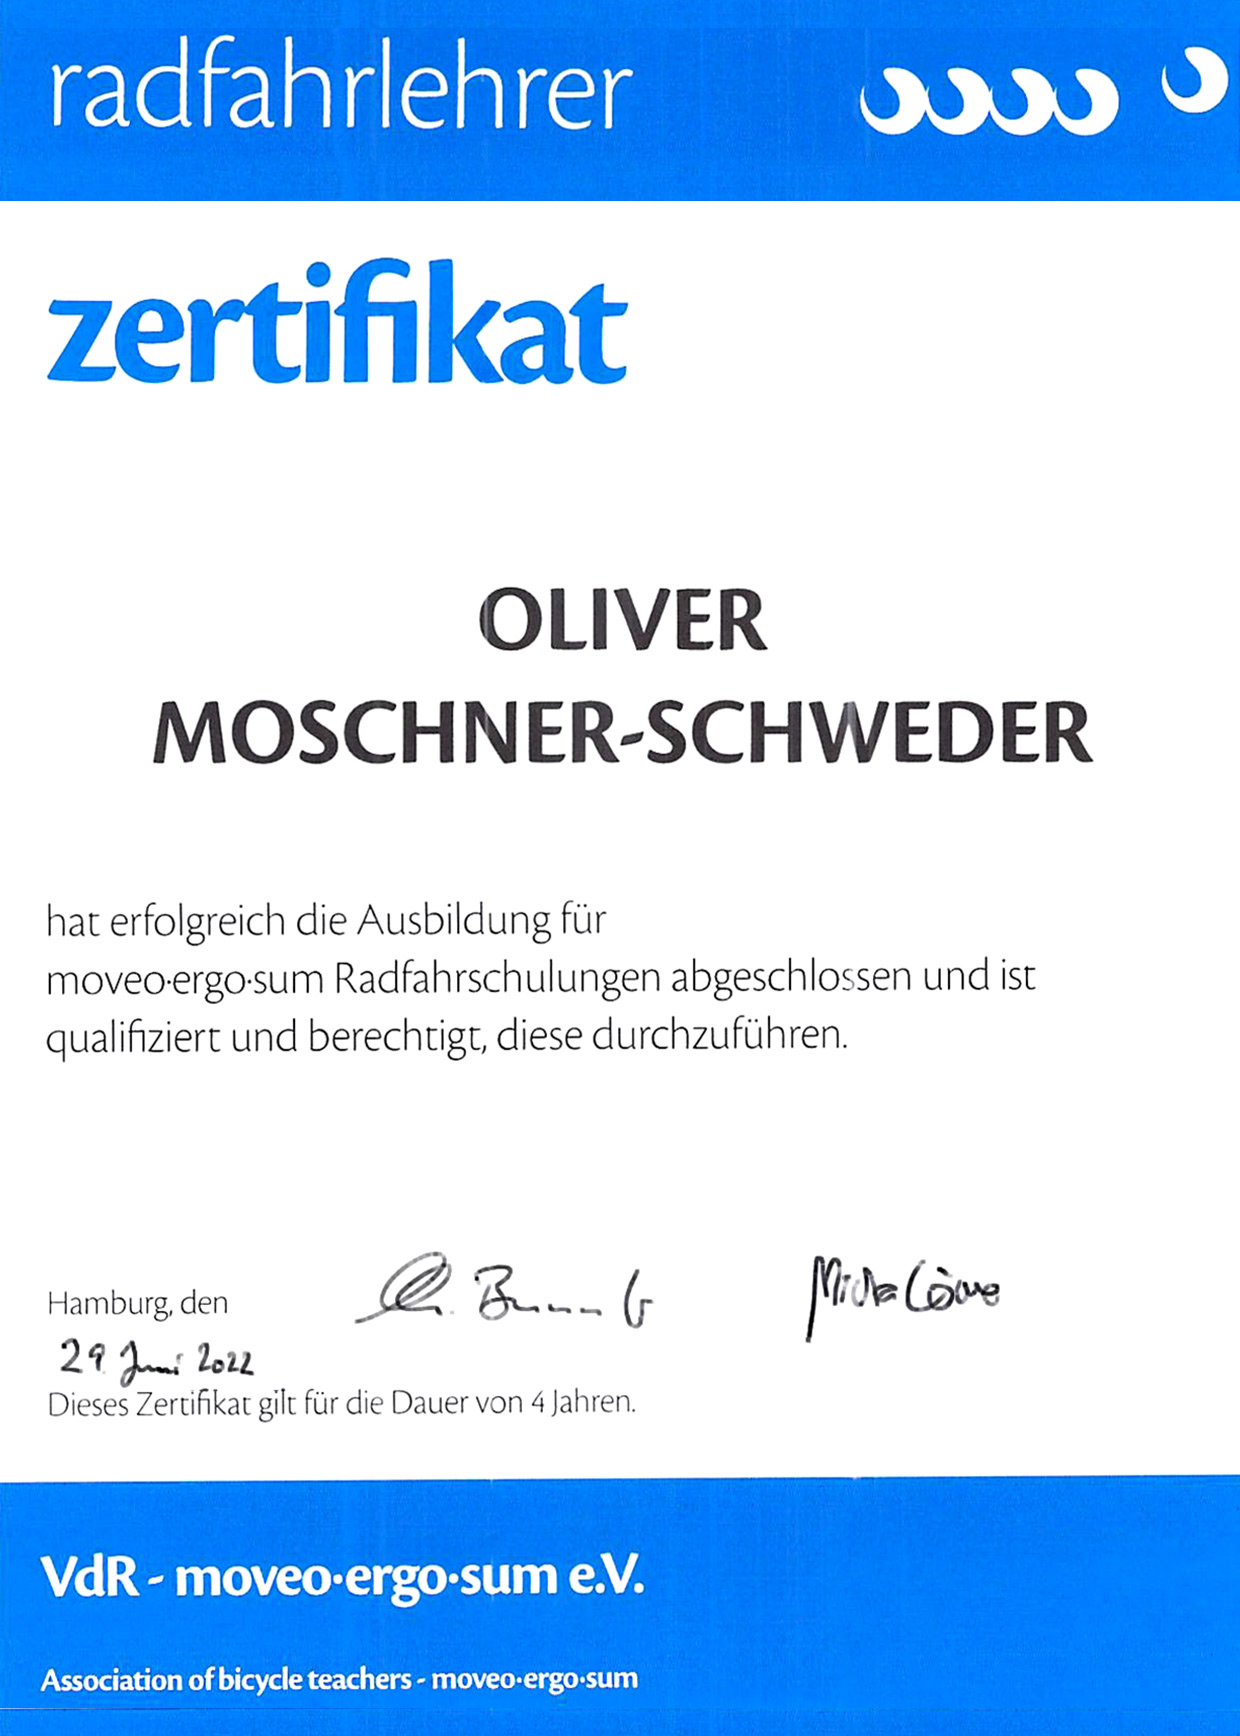 Zertifikat Radfahrlehrer moveo-ergo-sum